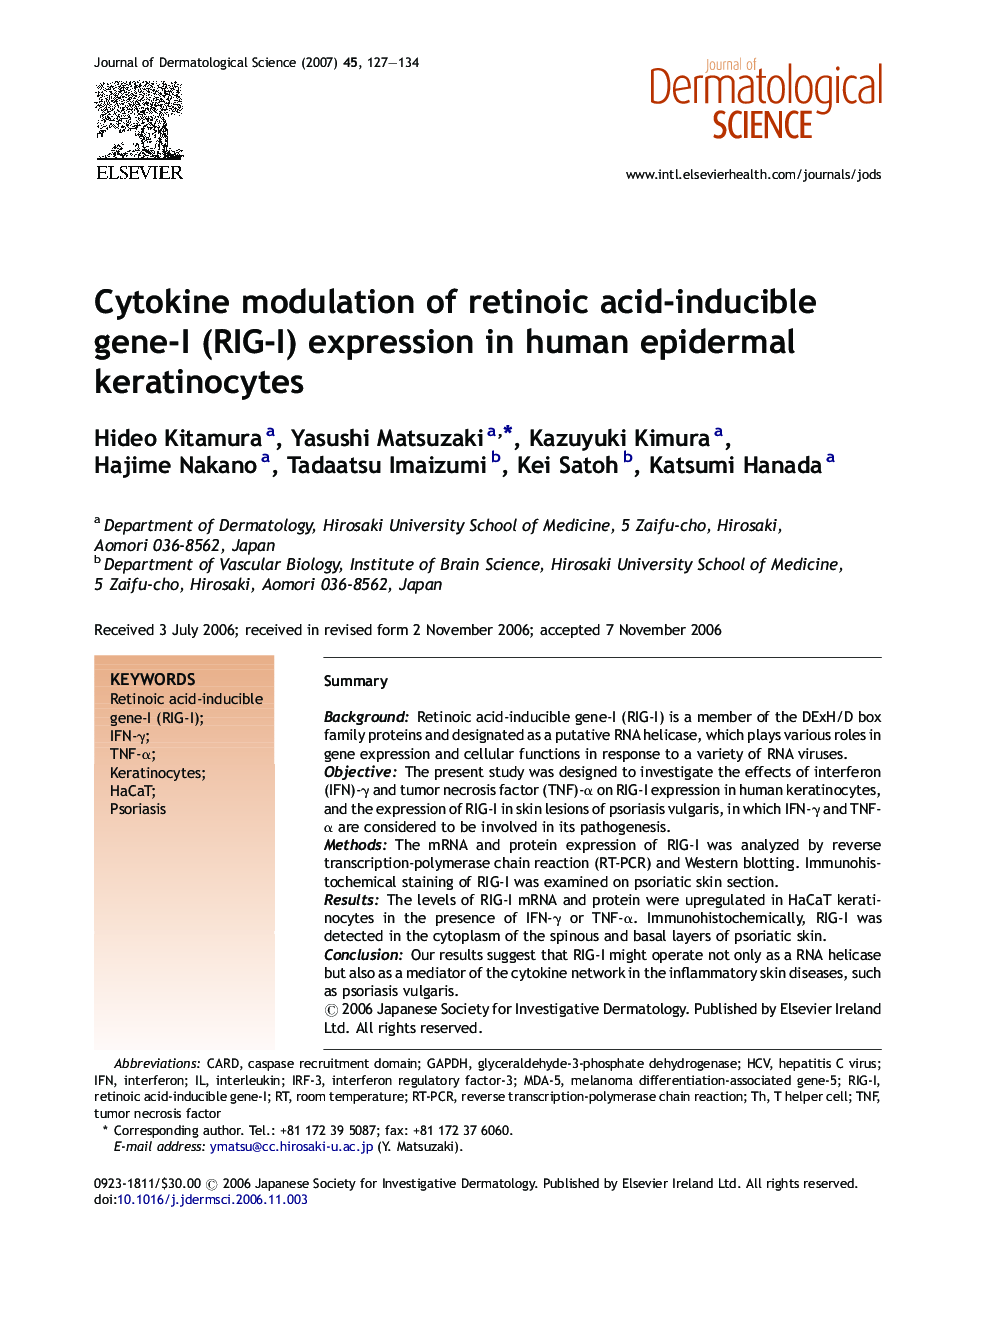 Cytokine modulation of retinoic acid-inducible gene-I (RIG-I) expression in human epidermal keratinocytes